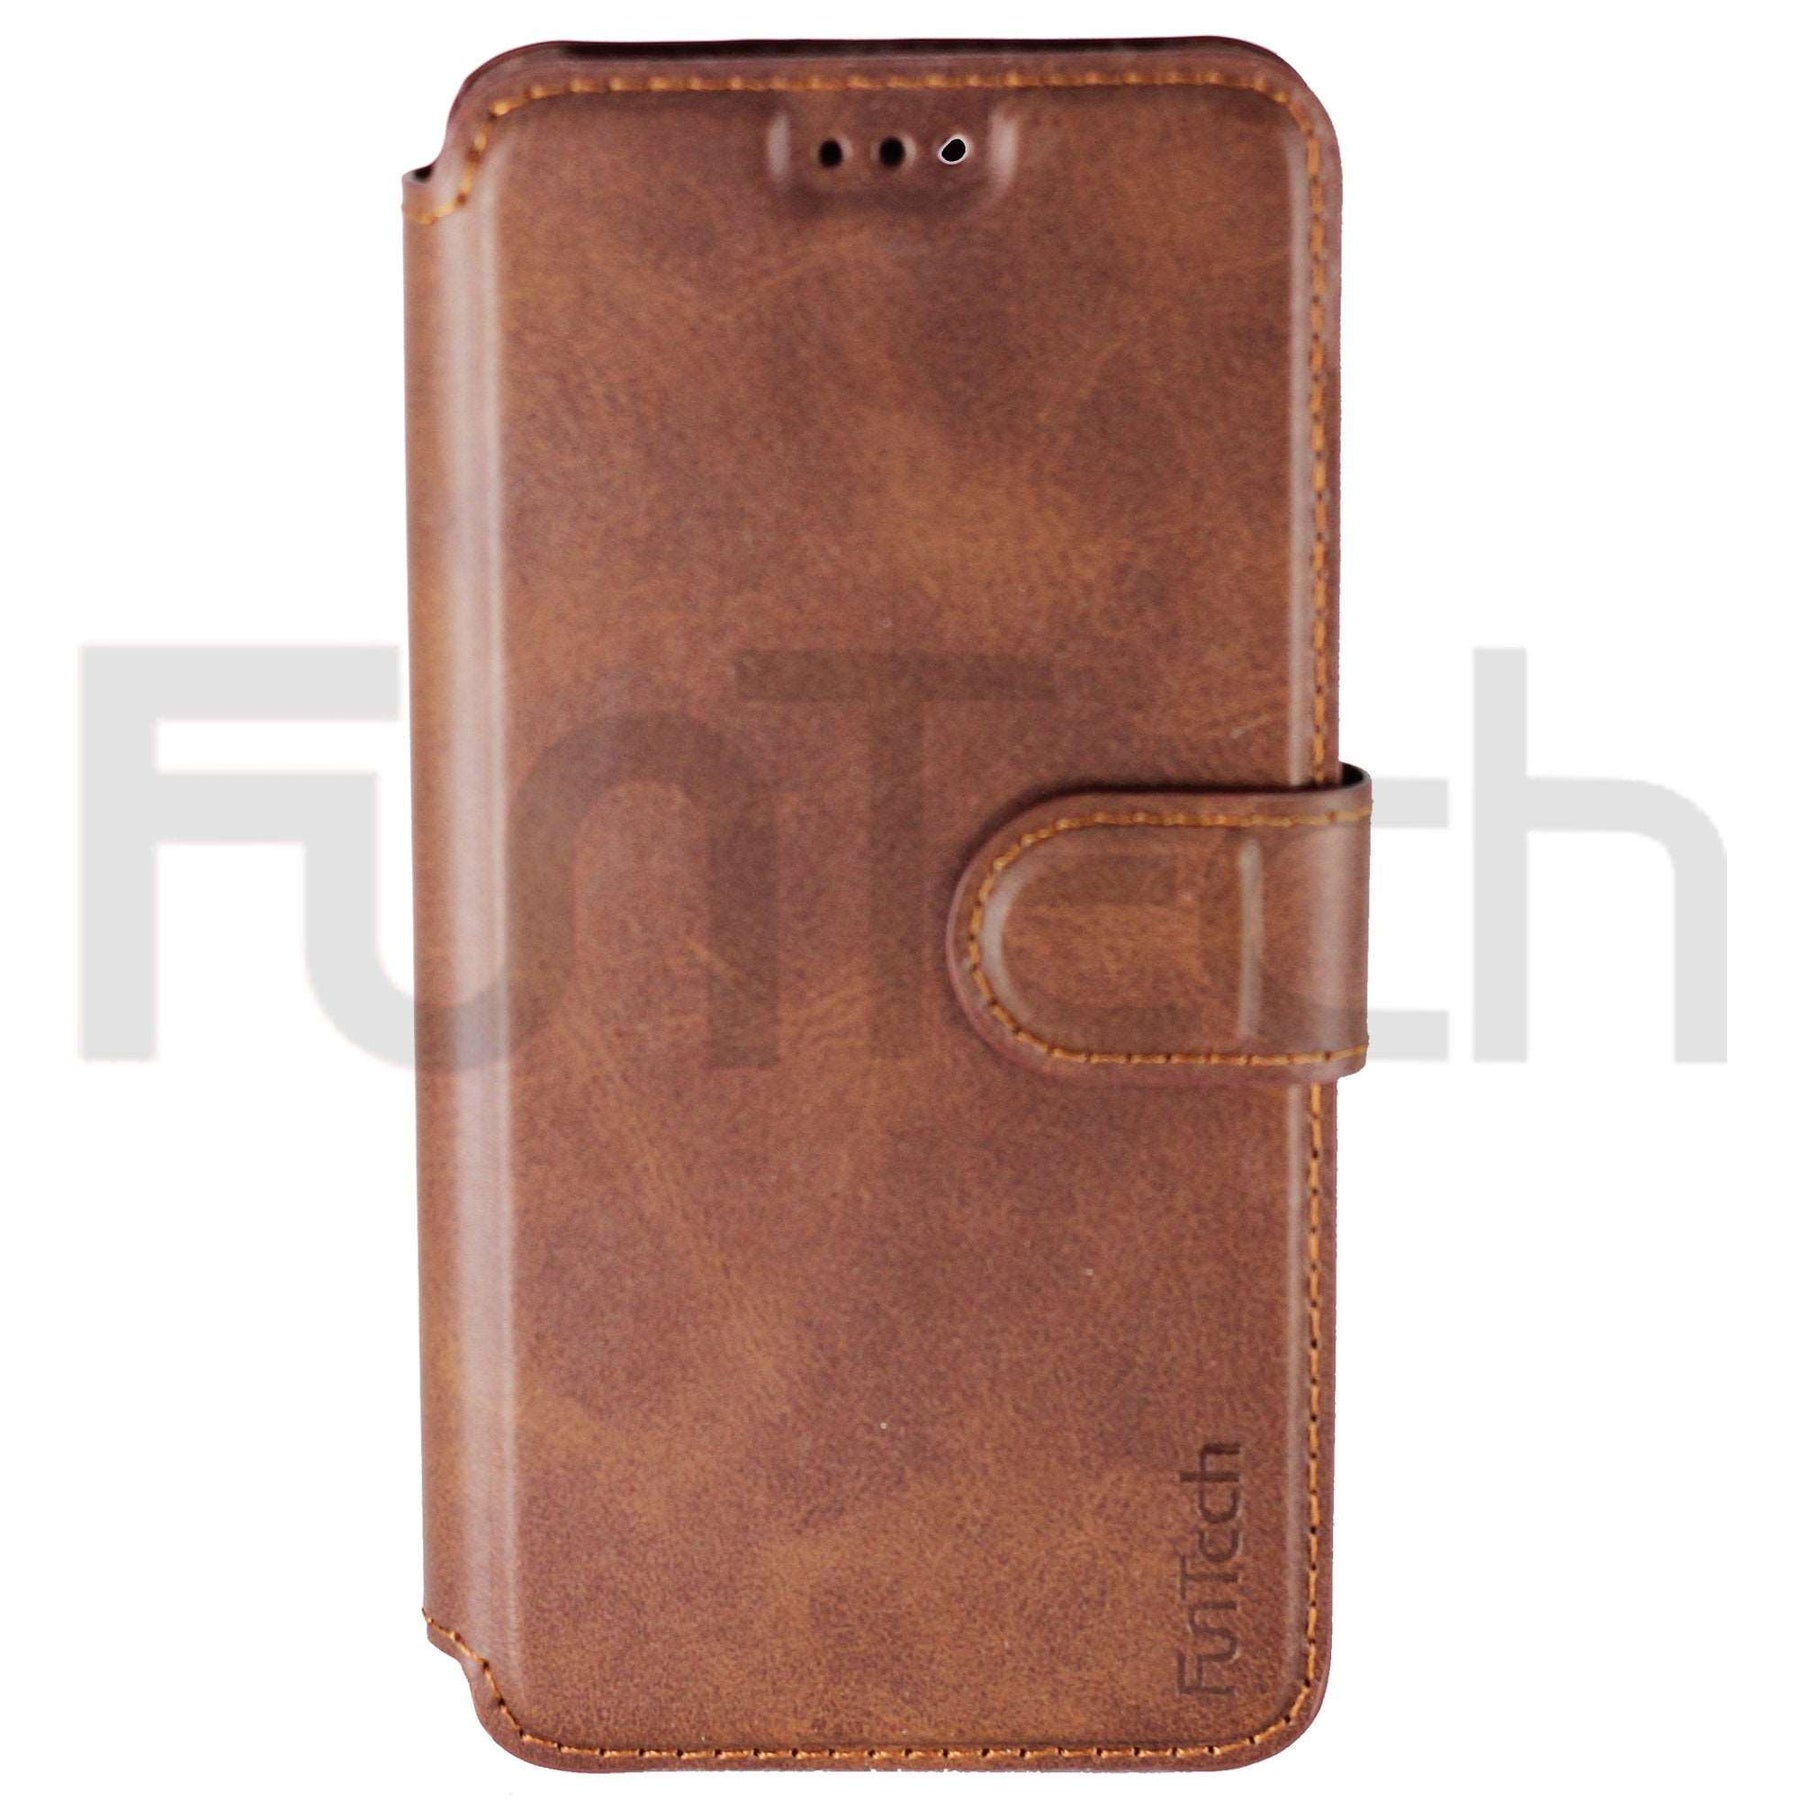 Apple iPhone 11 Pro Premium Quality Leather Case Brown